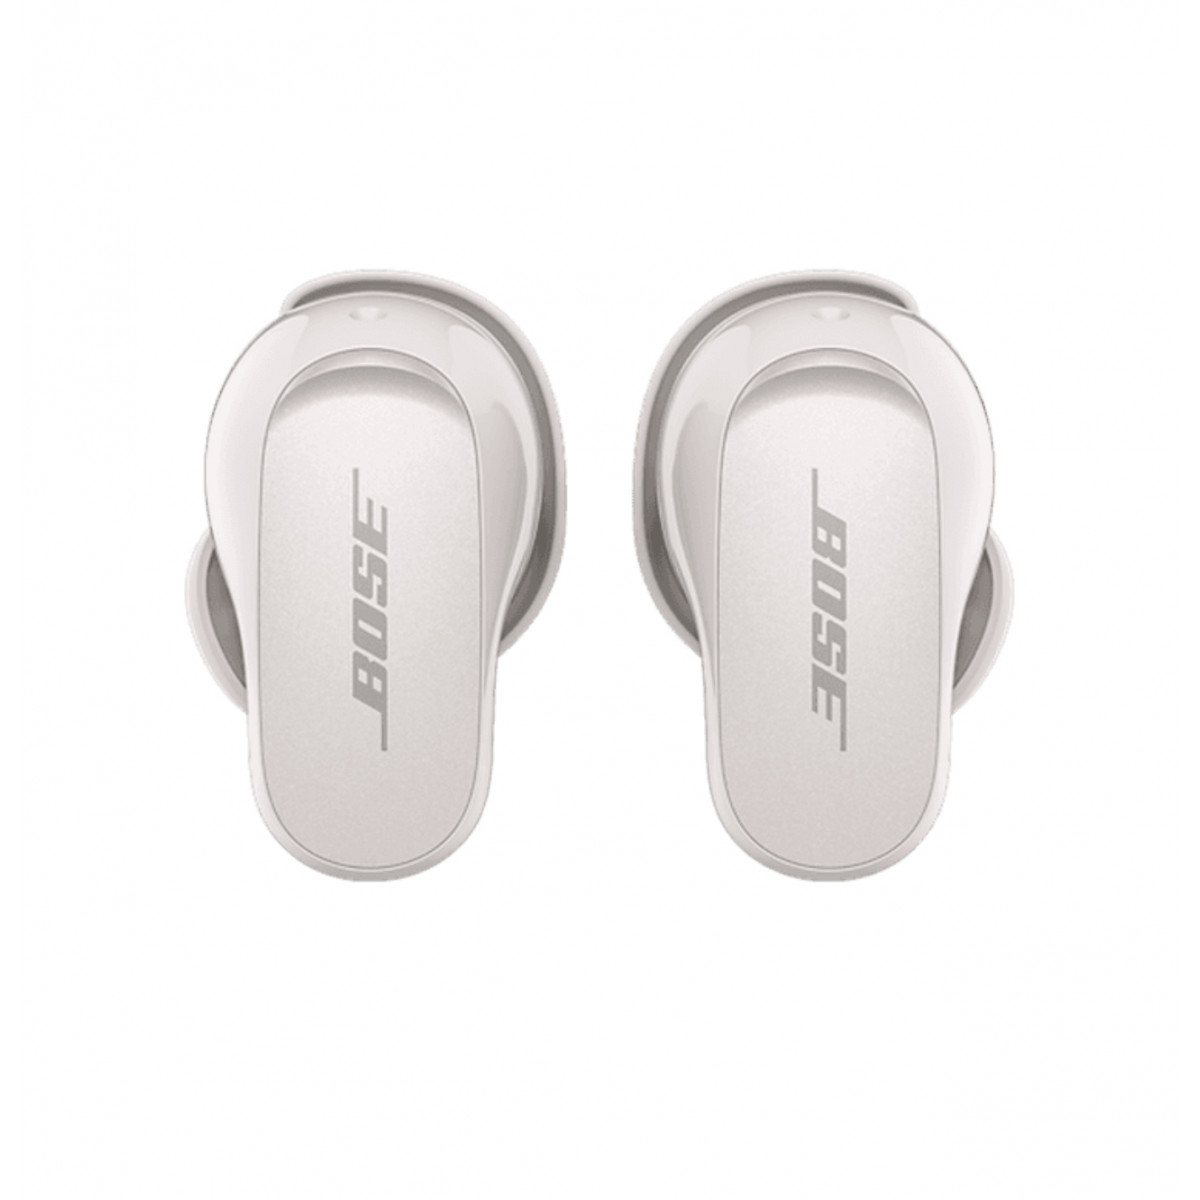 Наушники Bose QuietComfort Earbuds II